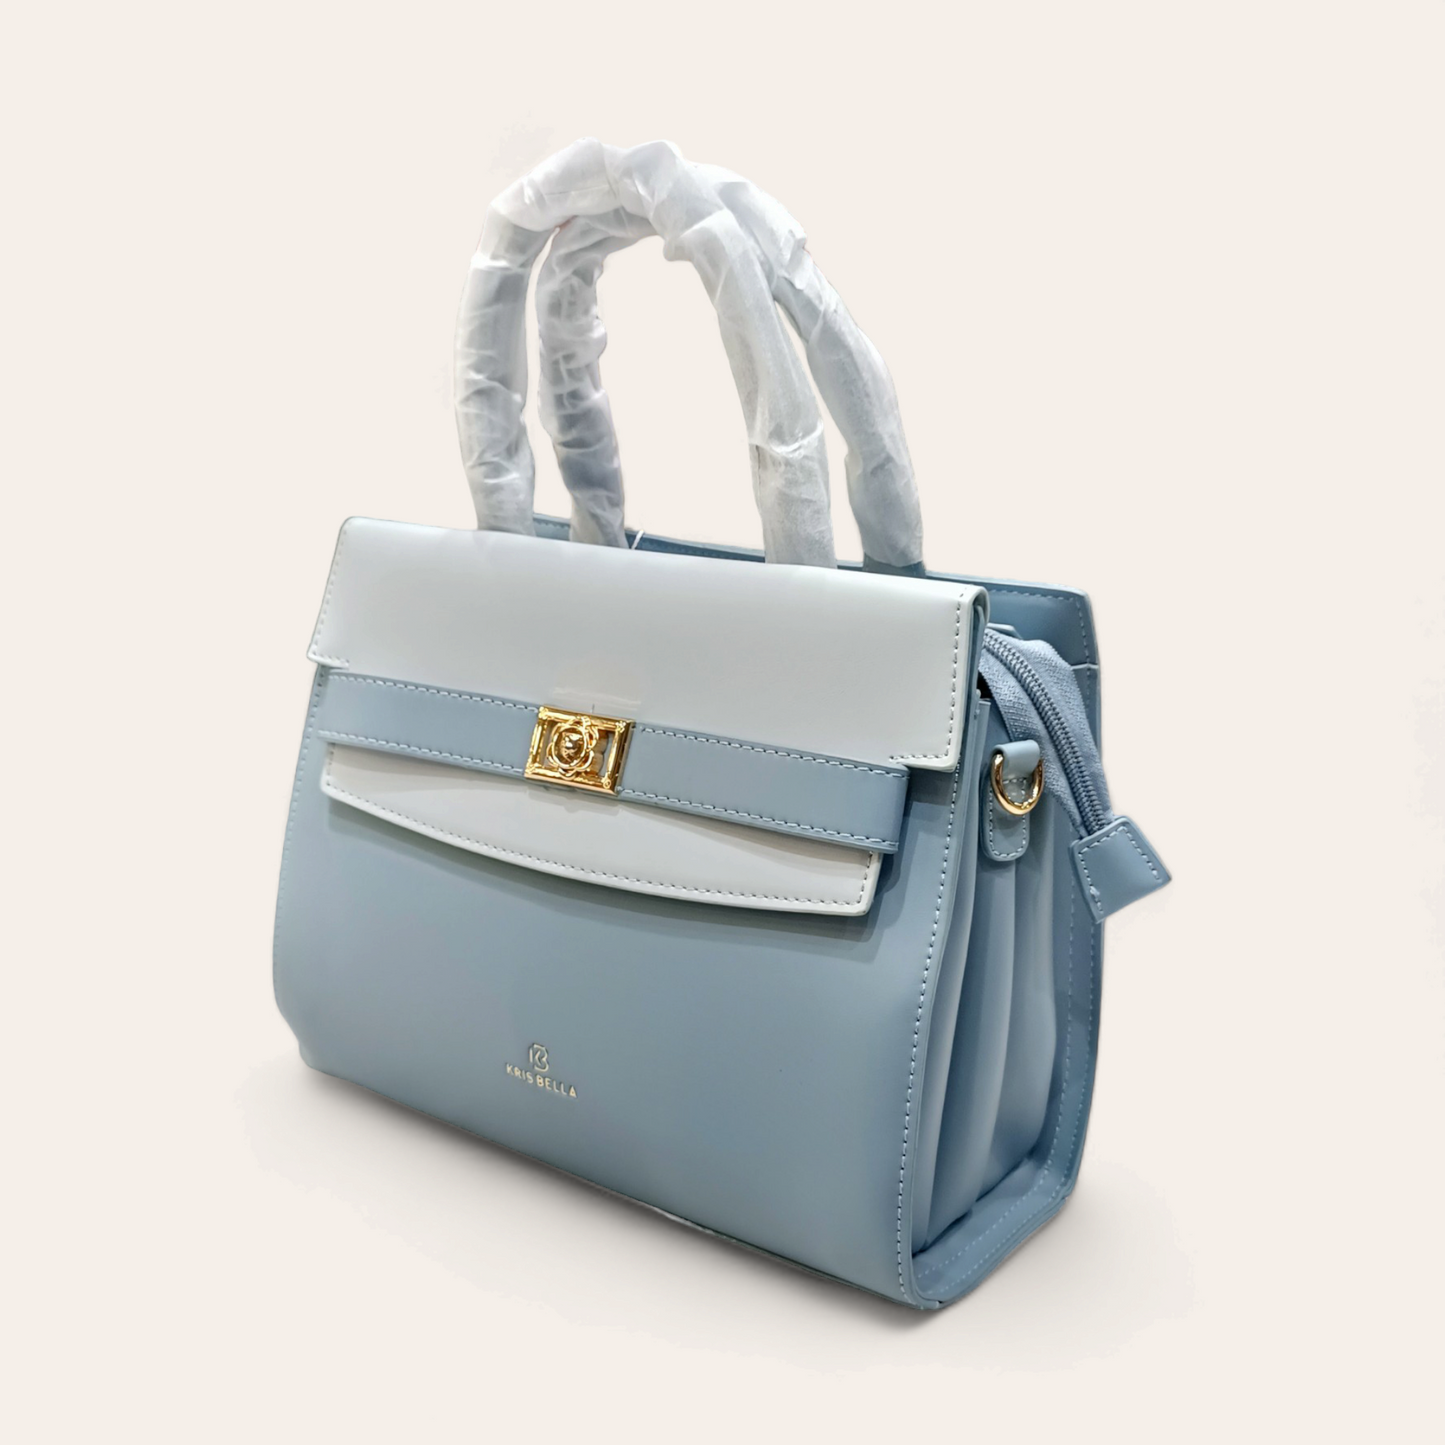 Premium Kris Bella Handbag with sling belt and more than 3 compartment